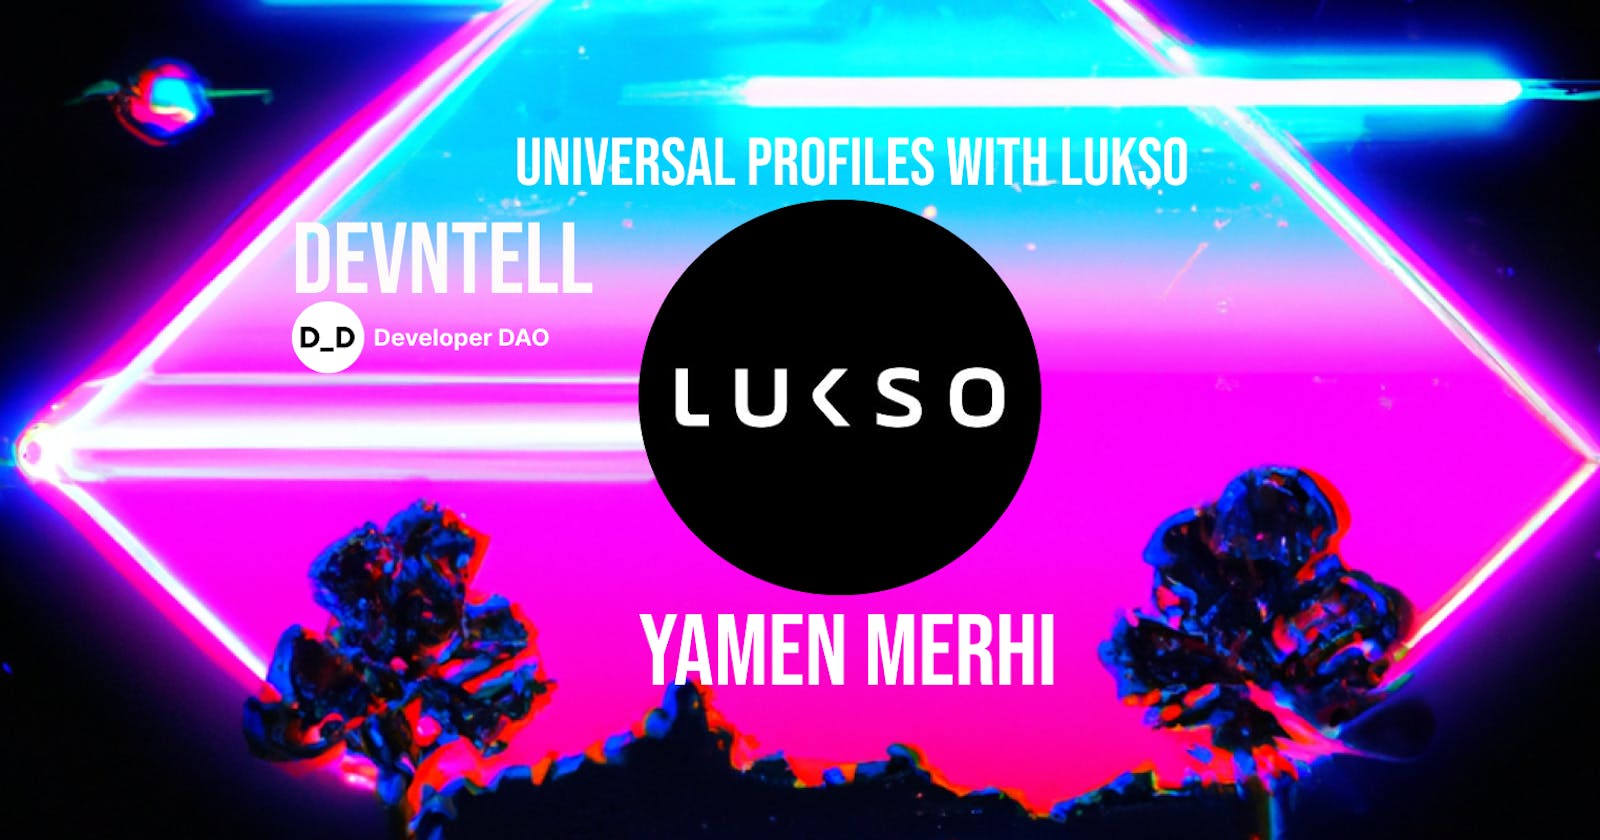 DevNTell - Universal Profiles with Lukso